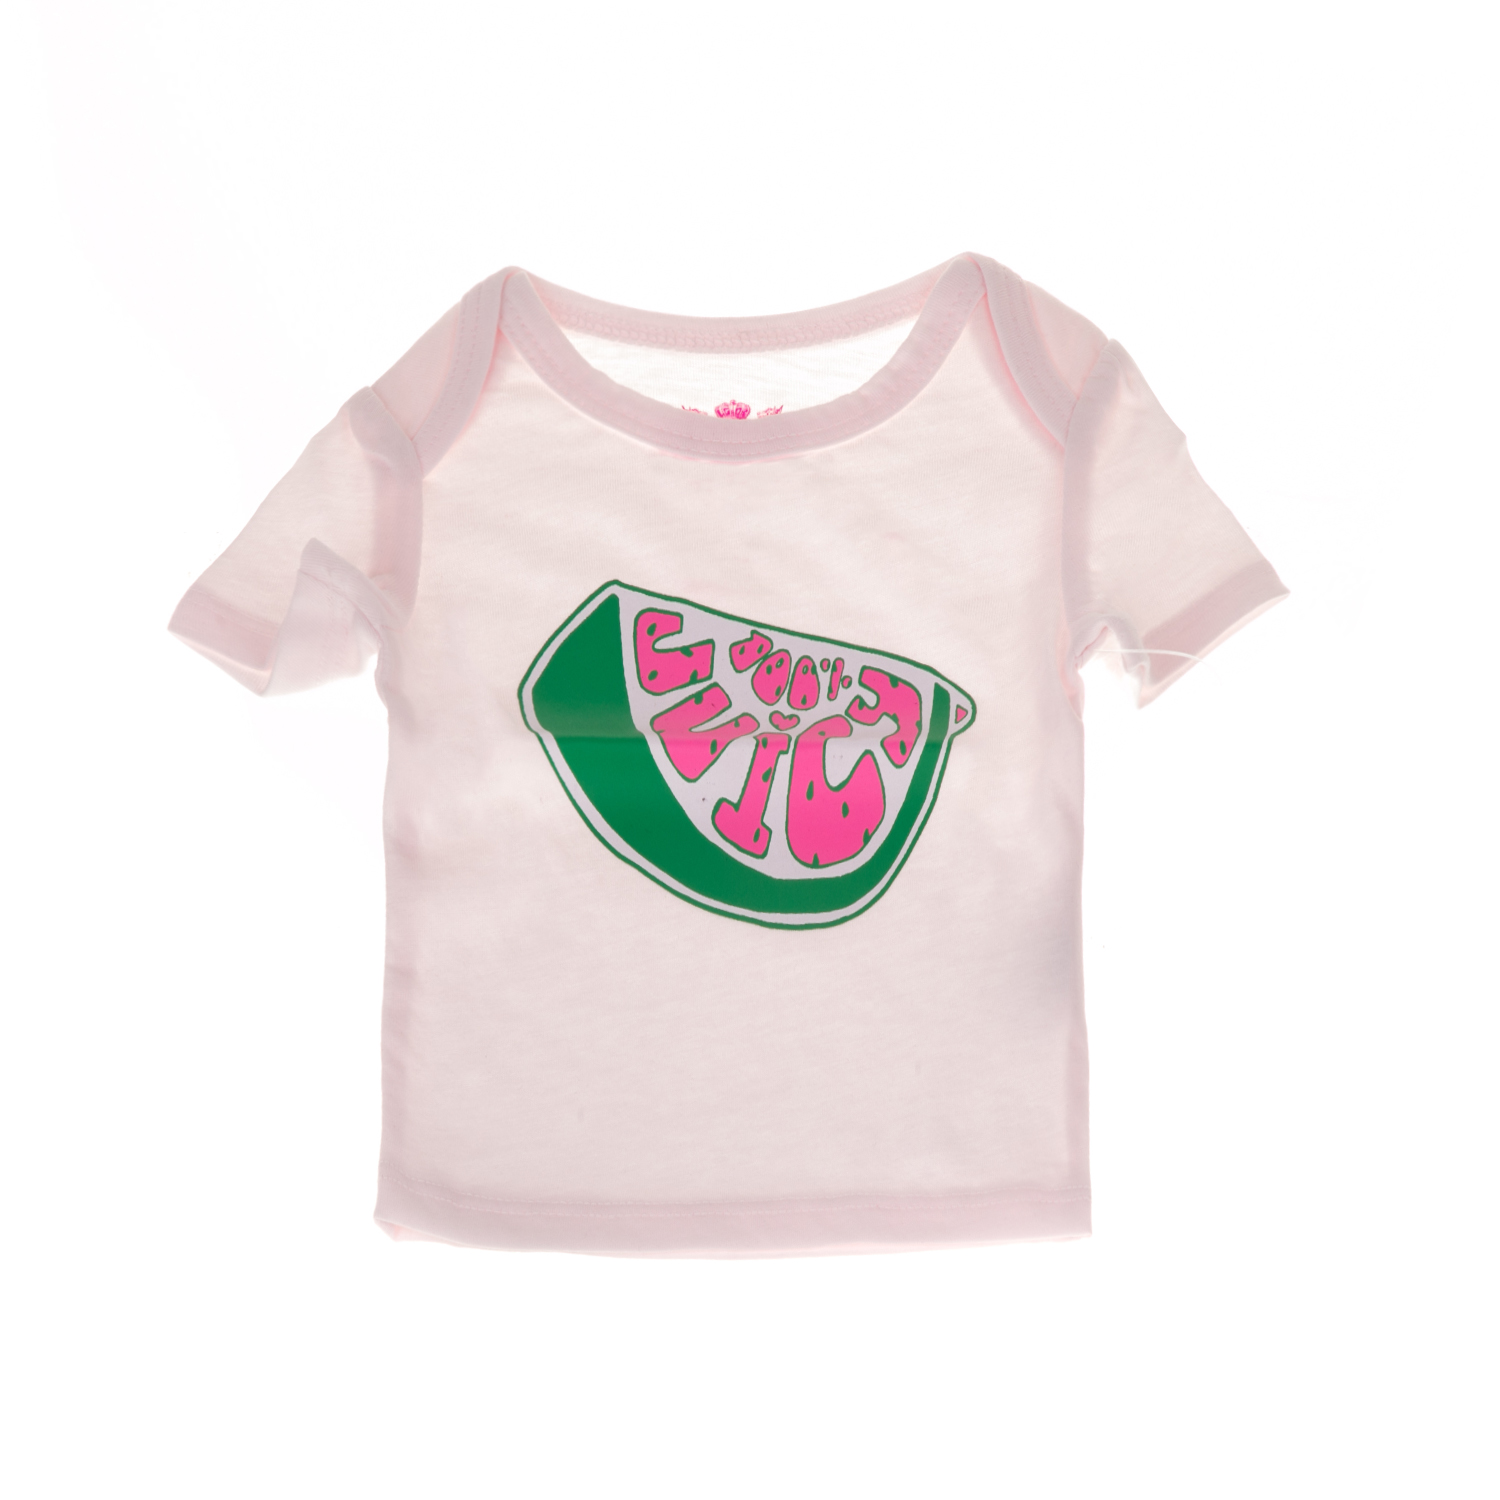 JUICY COUTURE KIDS - Βρεφικό t-shirt JUICY COUTURE KIDS ροζ Παιδικά/Baby/Ρούχα/Μπλούζες